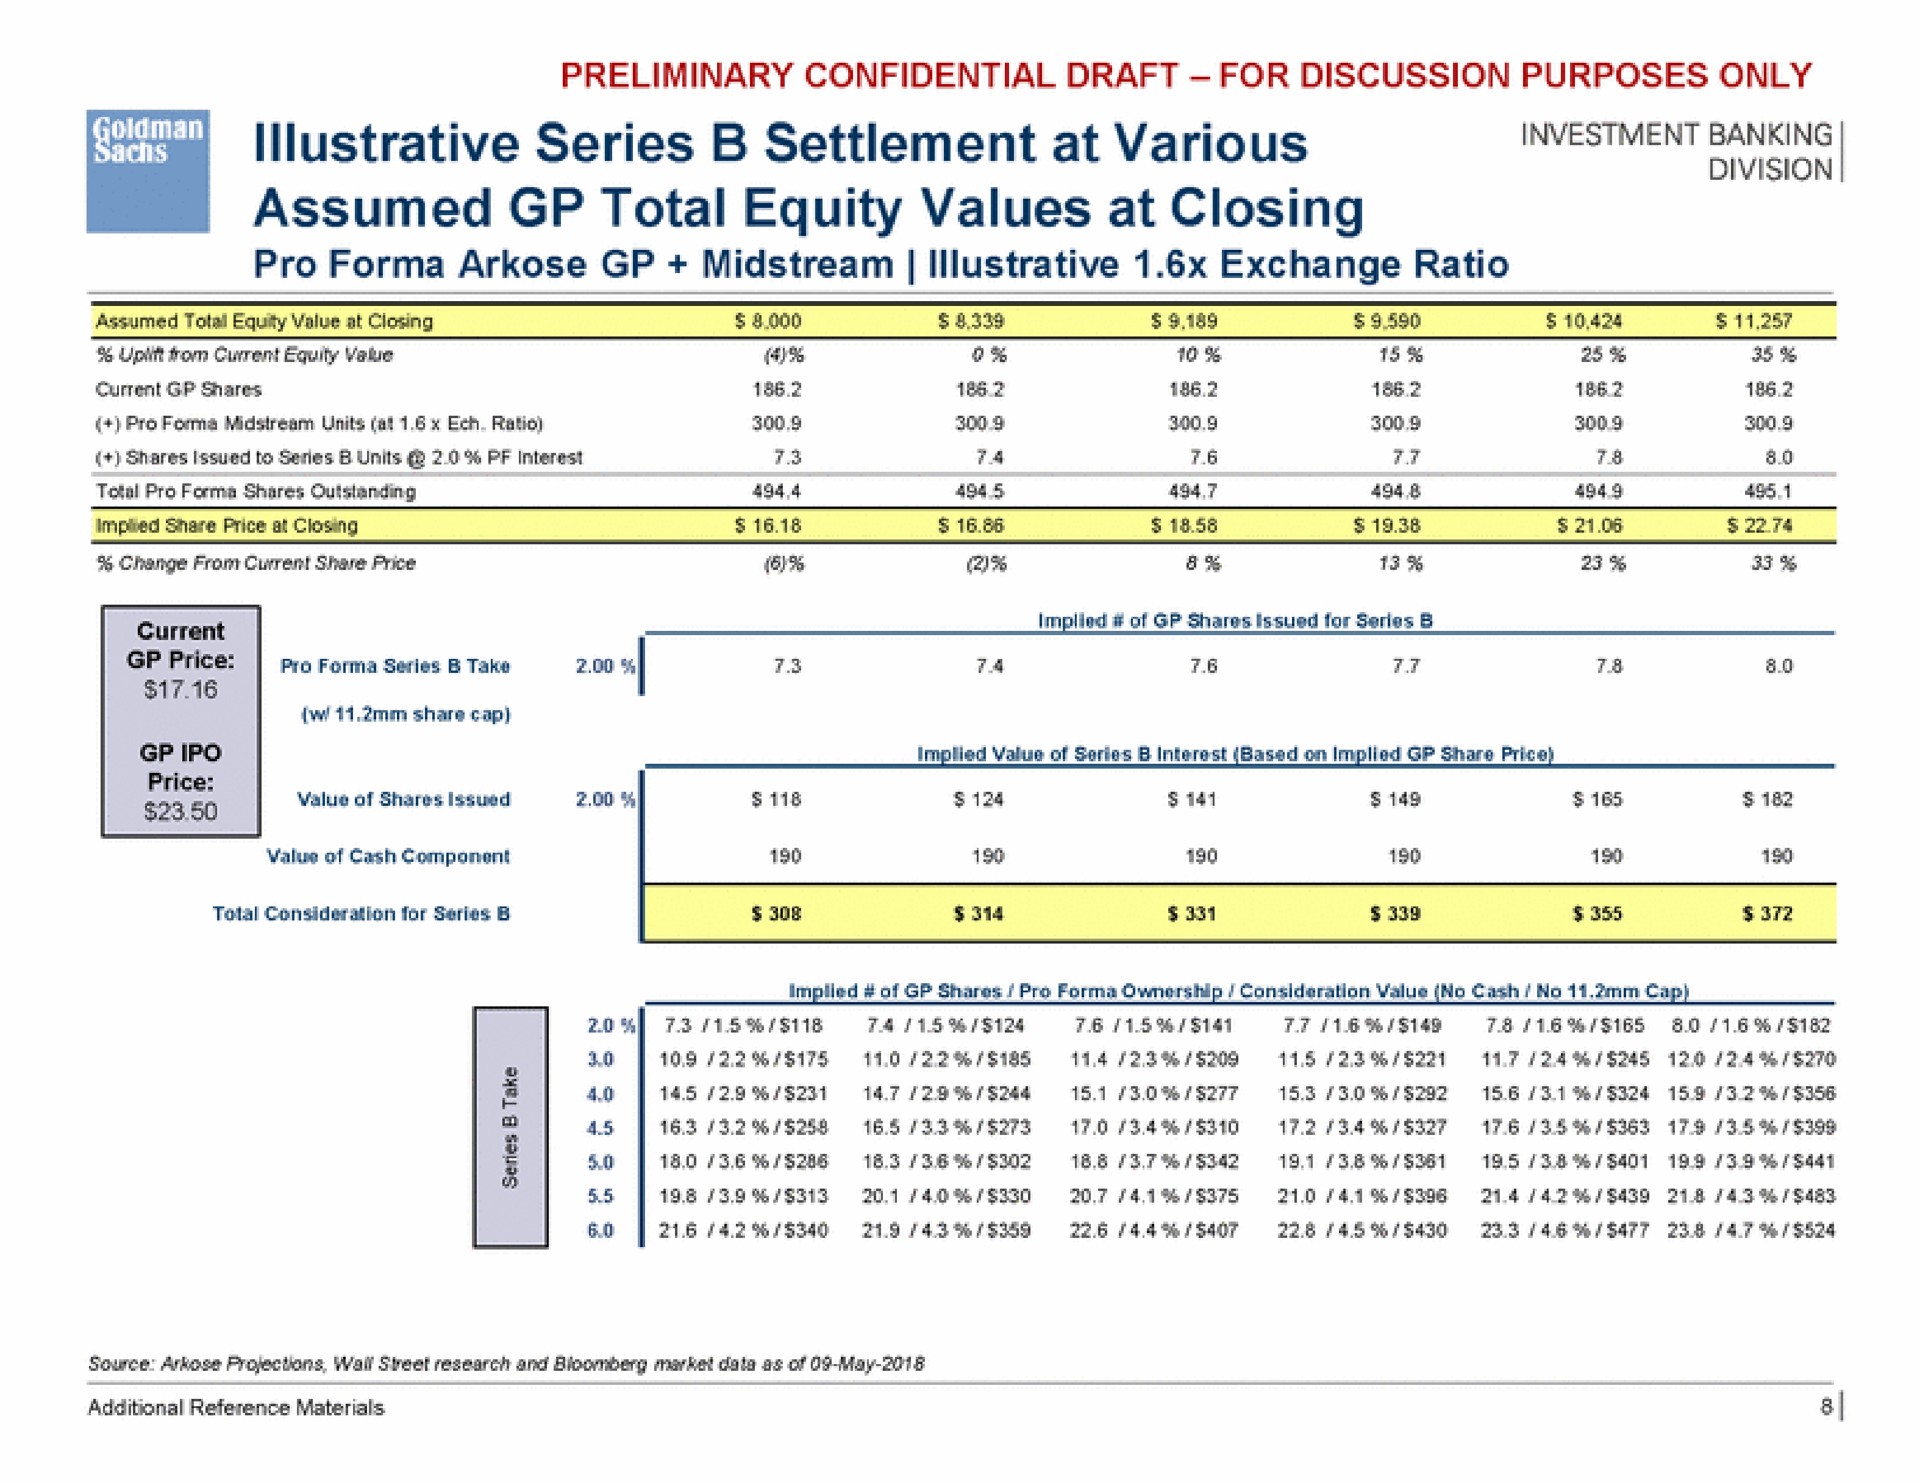 illustrative series settlement at various assumed total equity values at closing | Goldman Sachs